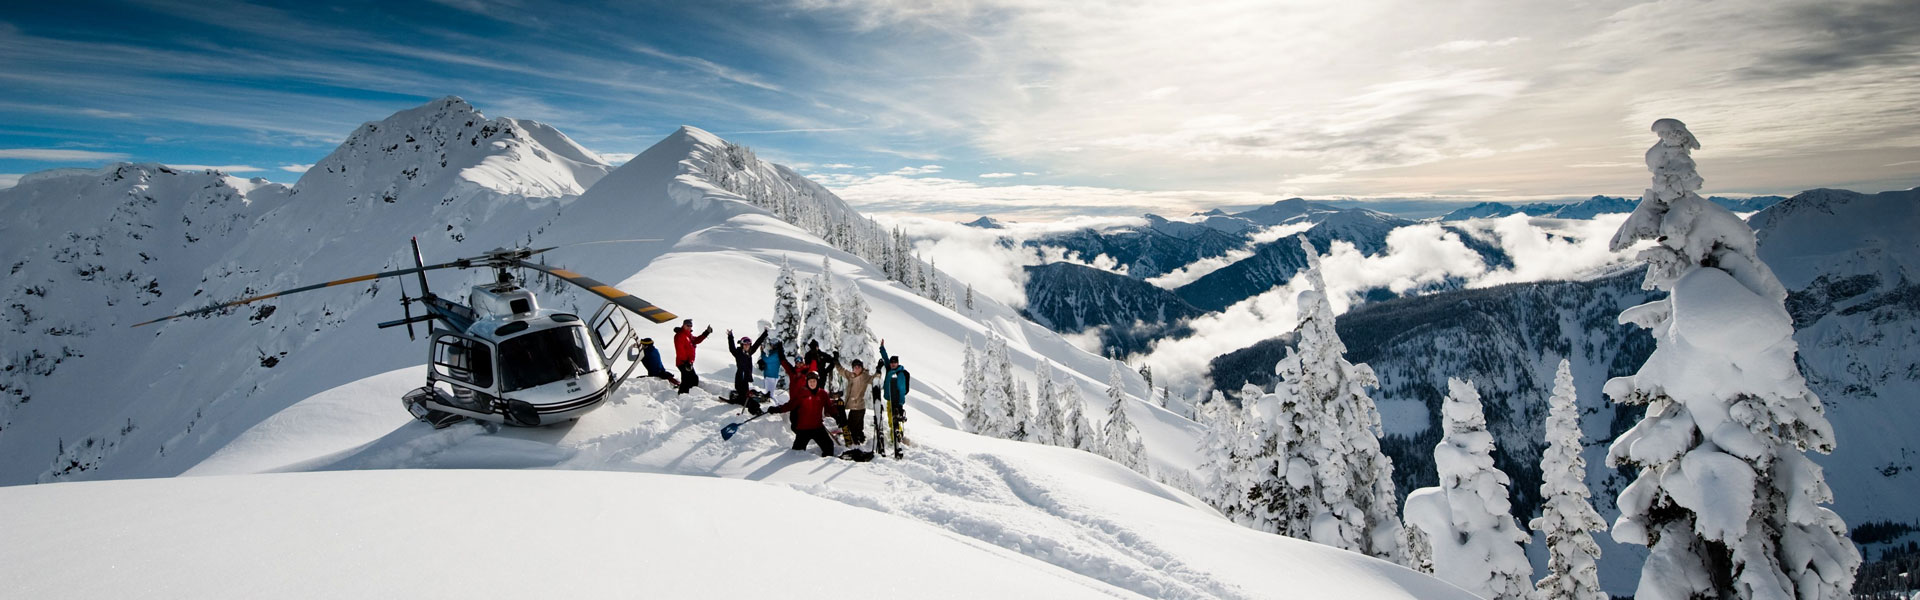 Canada Winter Trips | Rocky Mountaineer Train